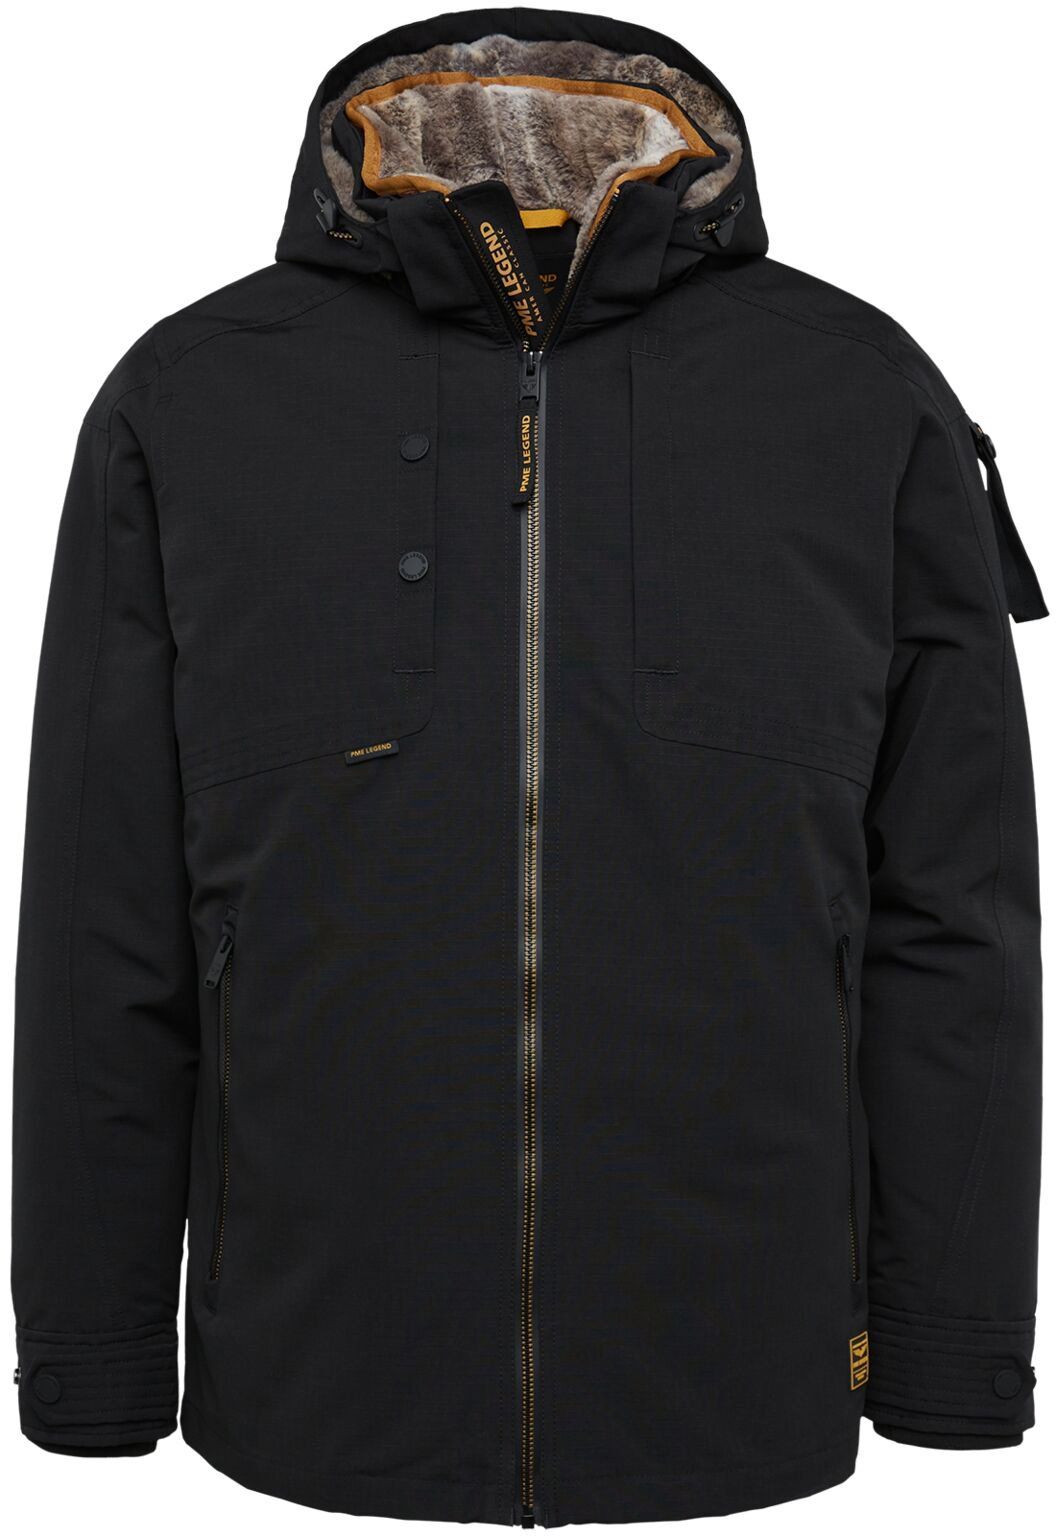 PME Legend Jacket Snowpack 2.0 Black size 3XL